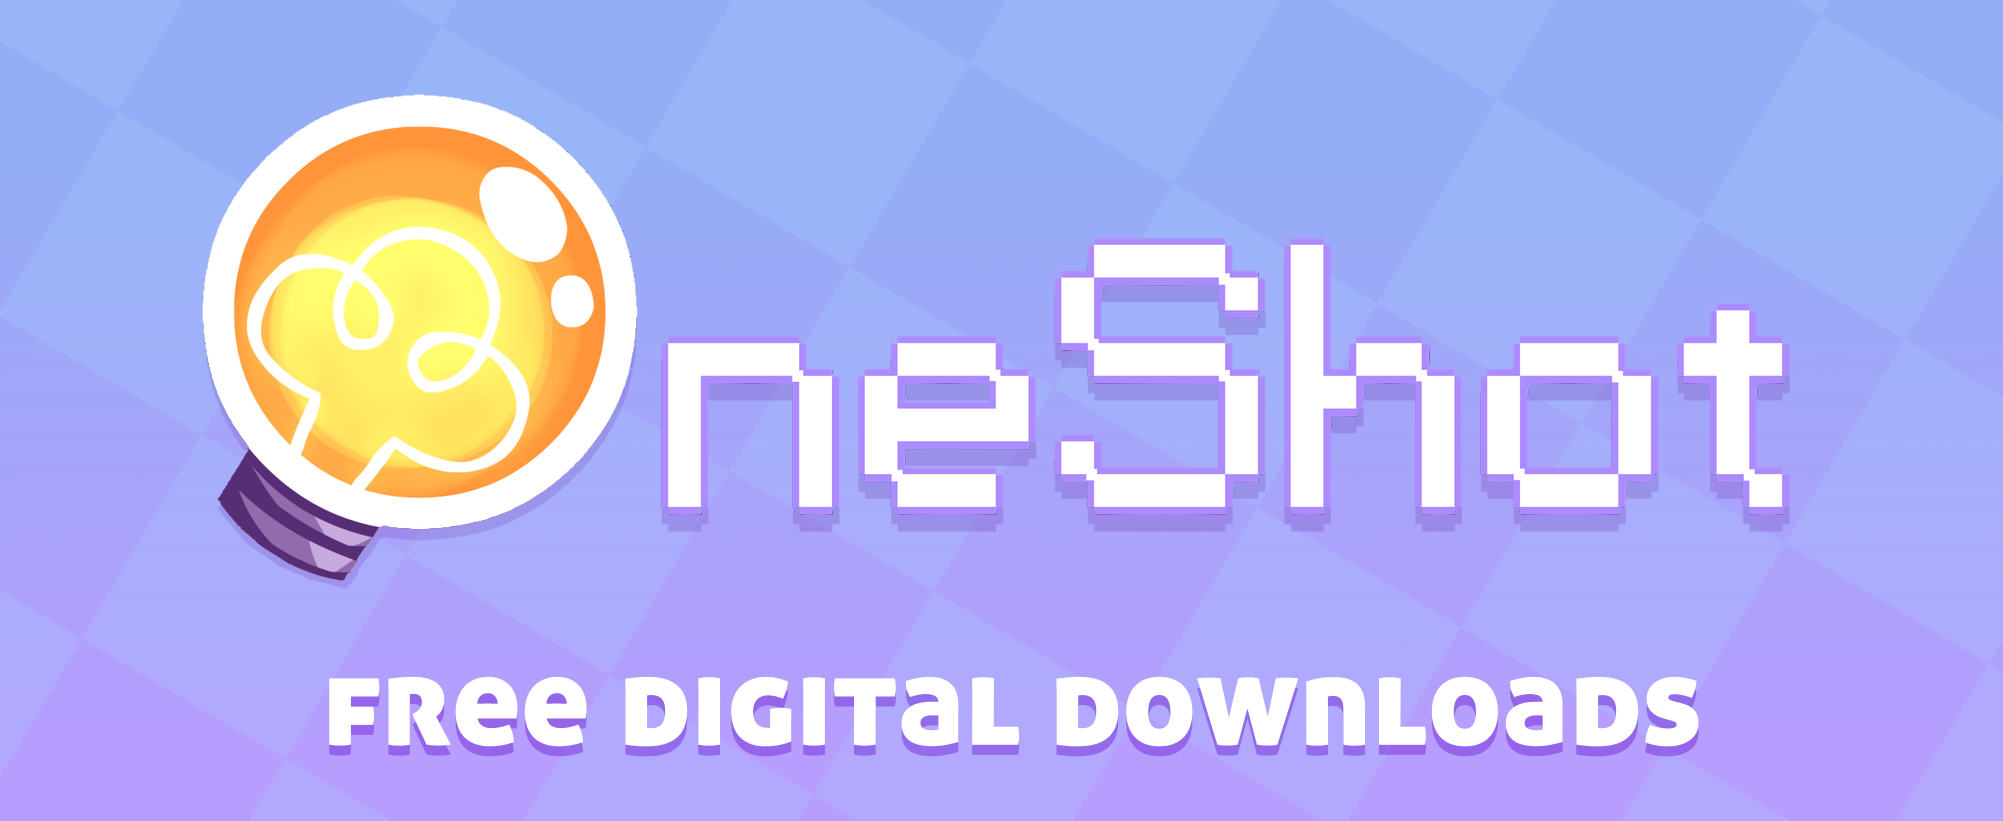 OneShot - free digital downloads